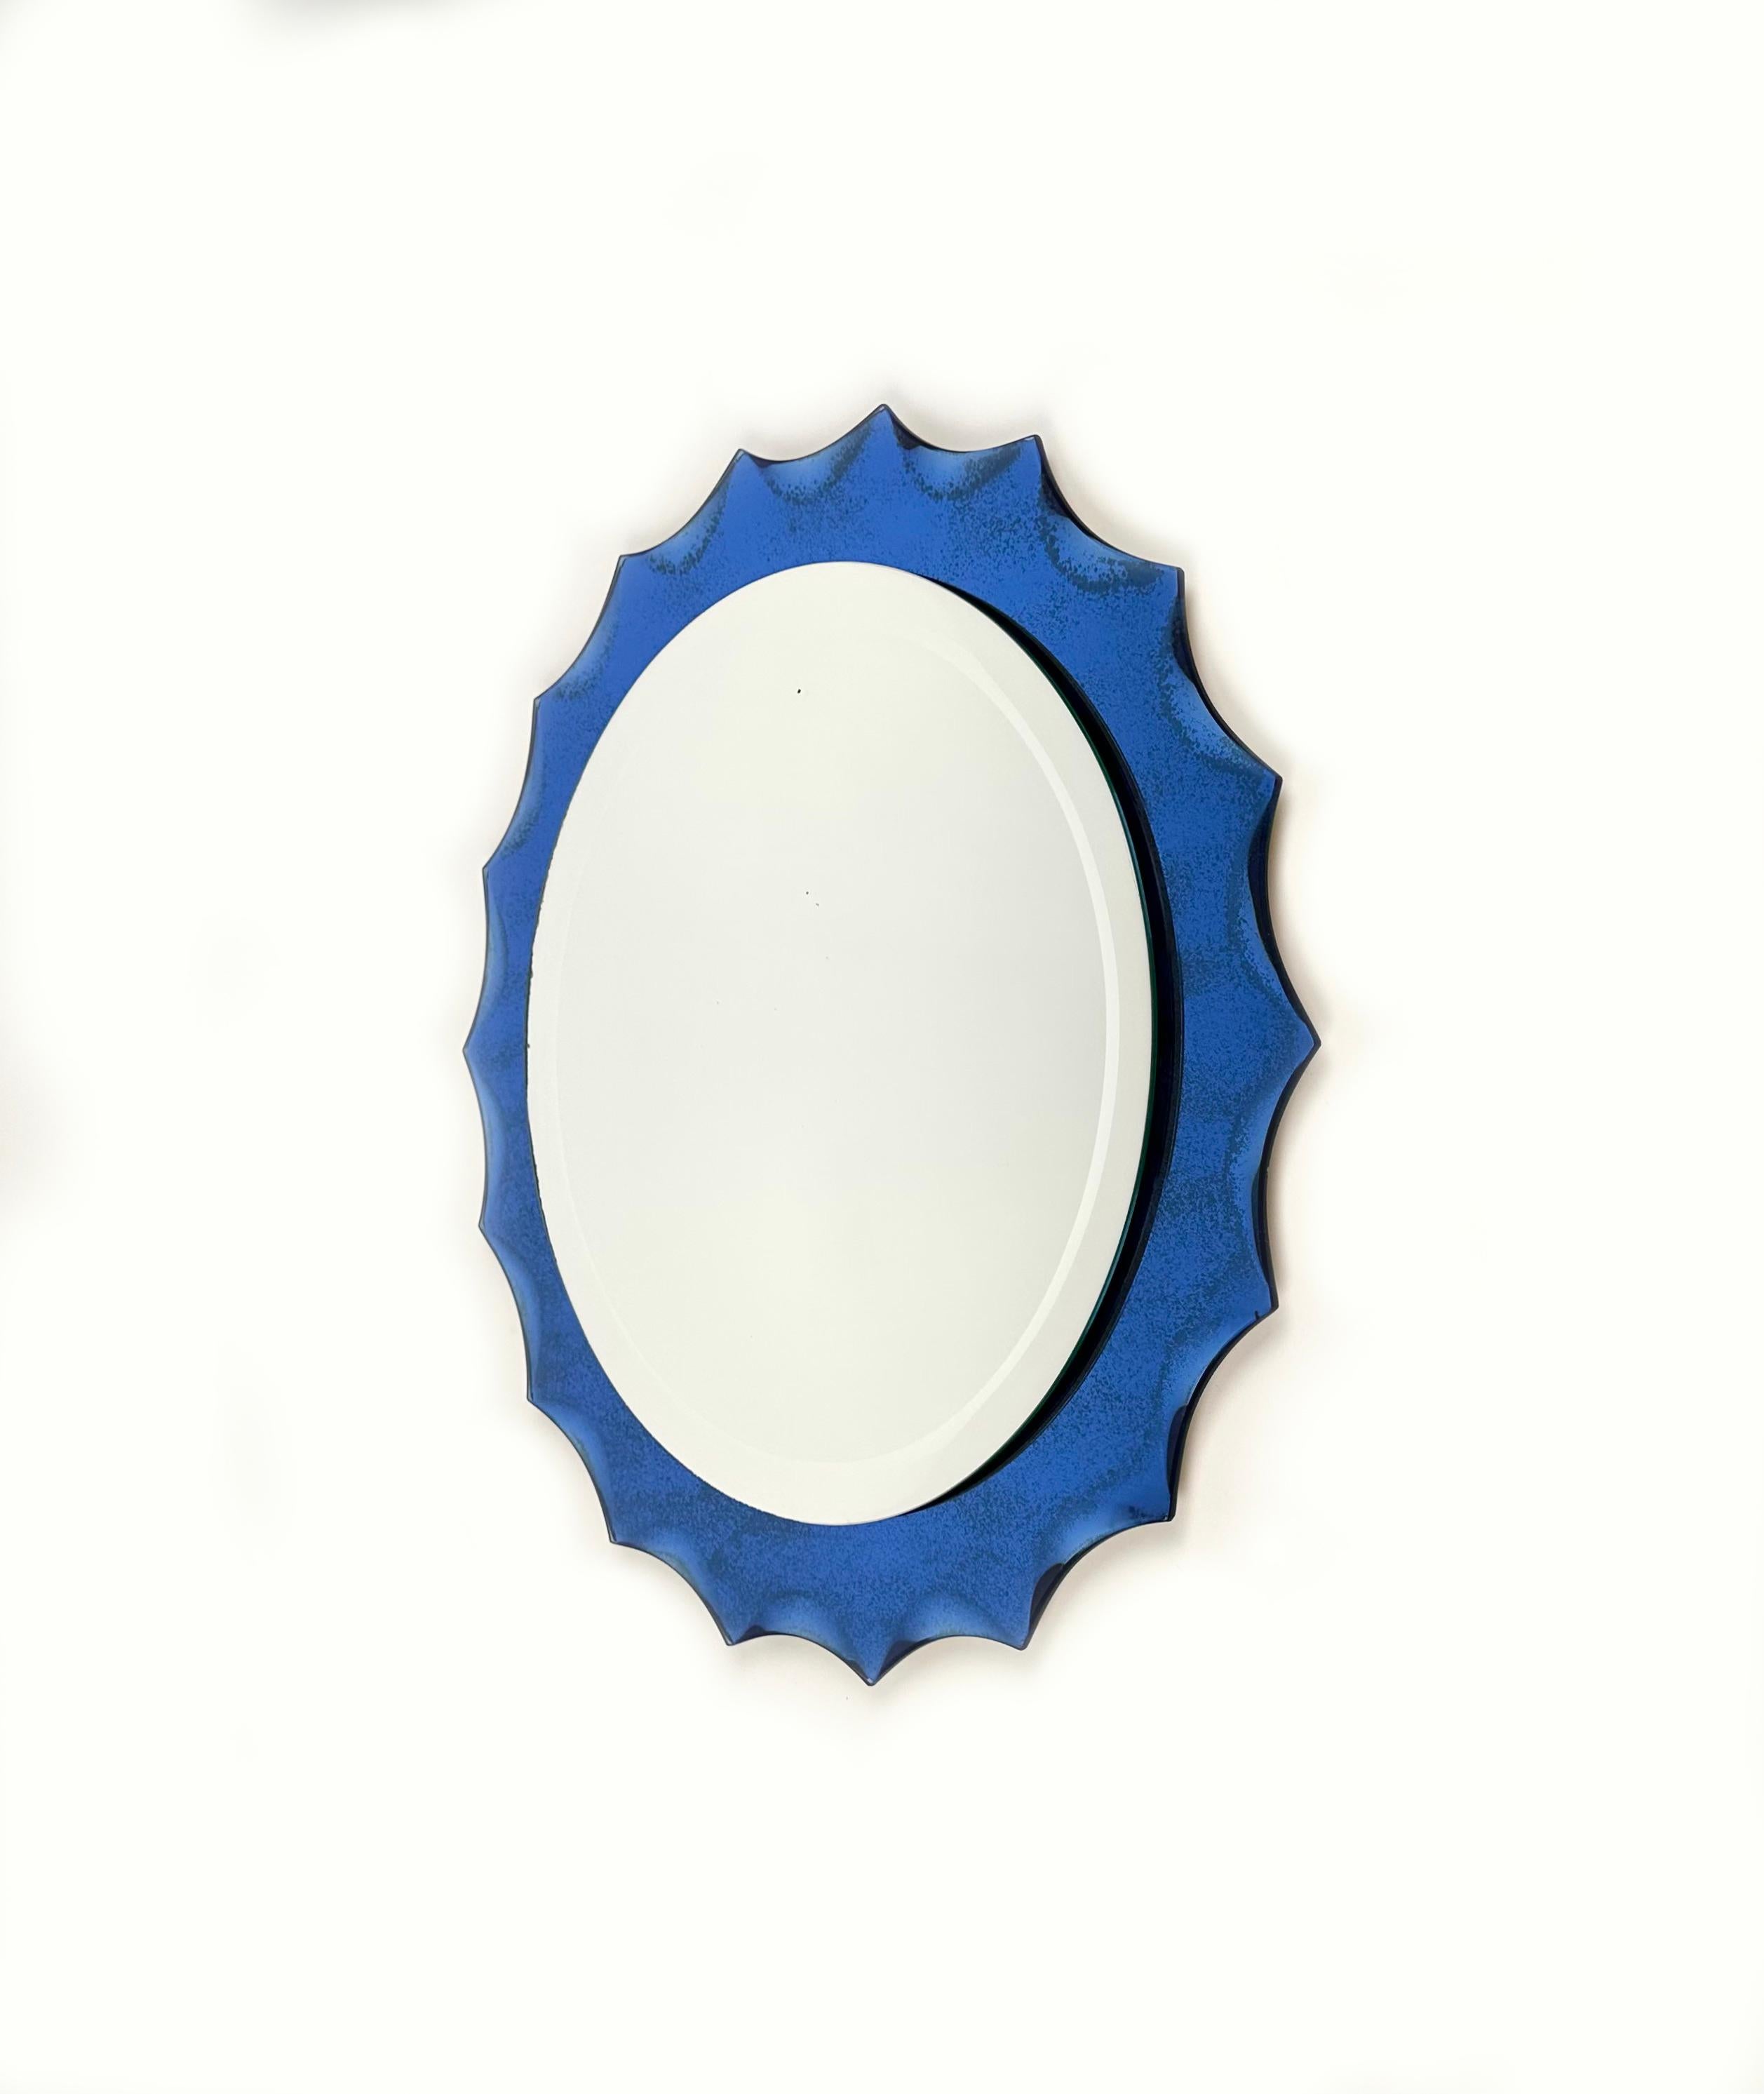 Cobalt Blue Sunburst Wall Mirror Fontana Arte Style, Italy, 1960s For Sale 4